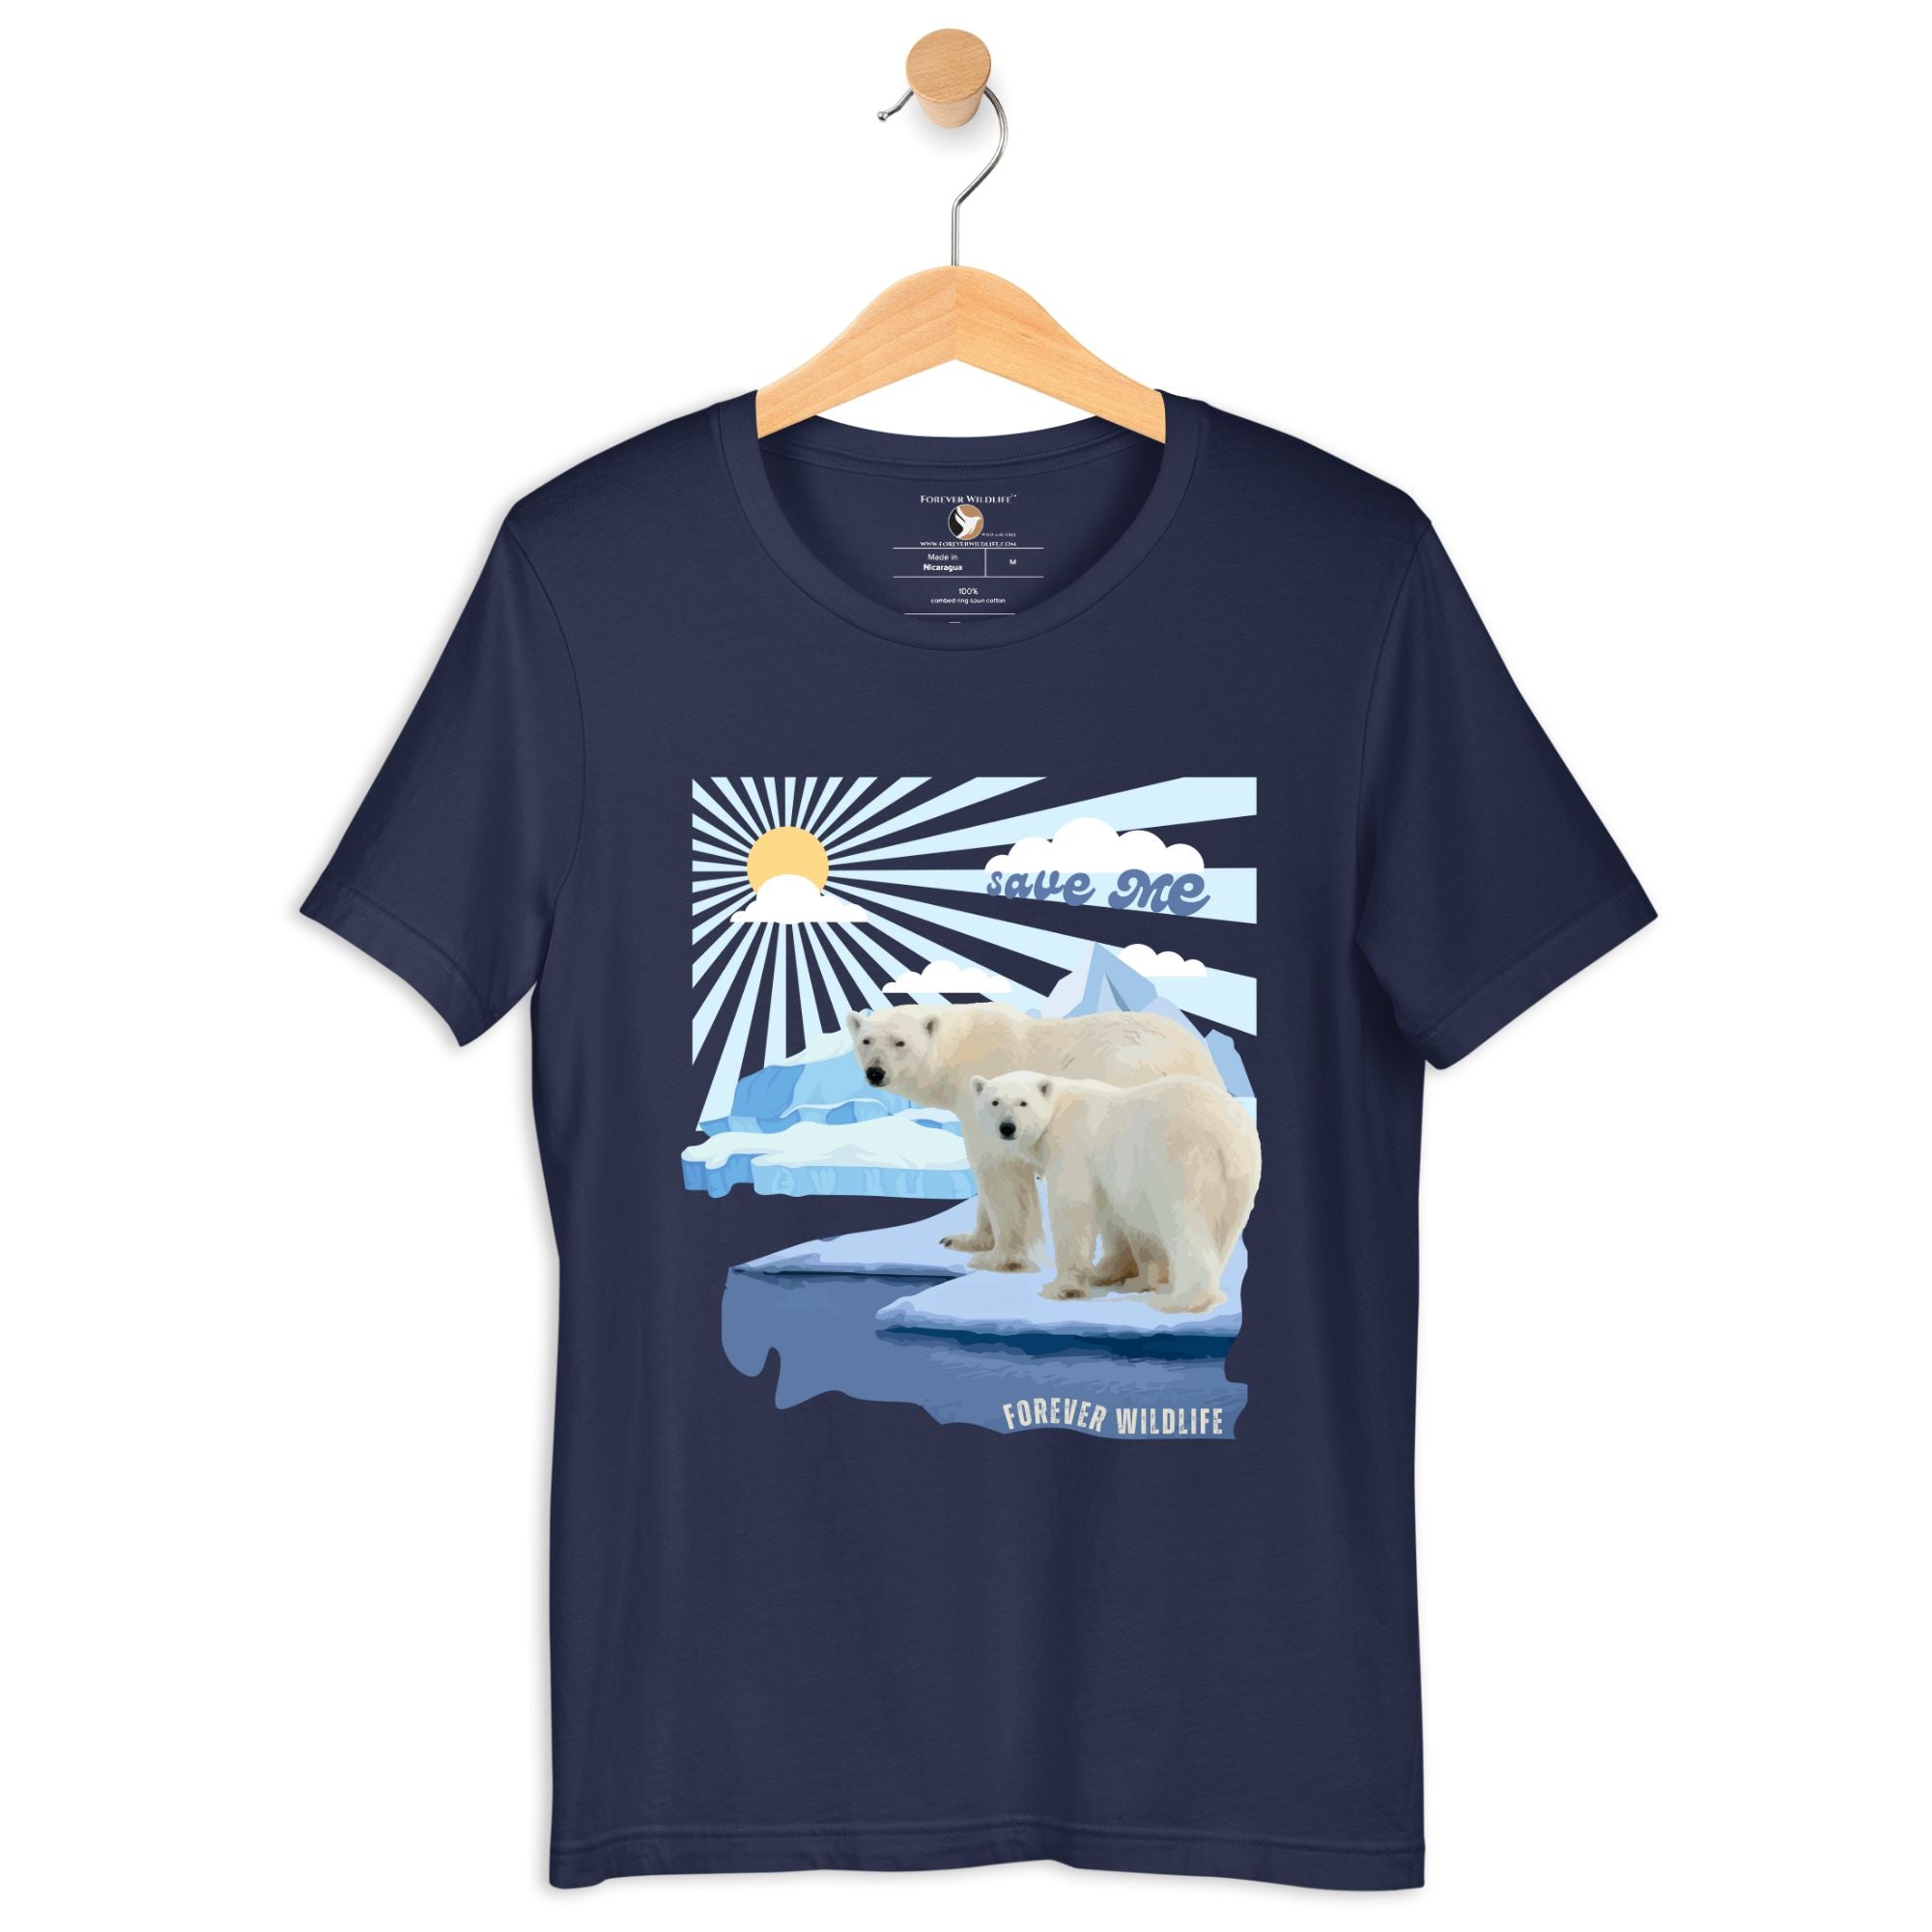 Polar Bears T-Shirt in Navy – Premium Wildlife T-Shirt Design, Wildlife Clothing & Apparel from Forever Wildlife